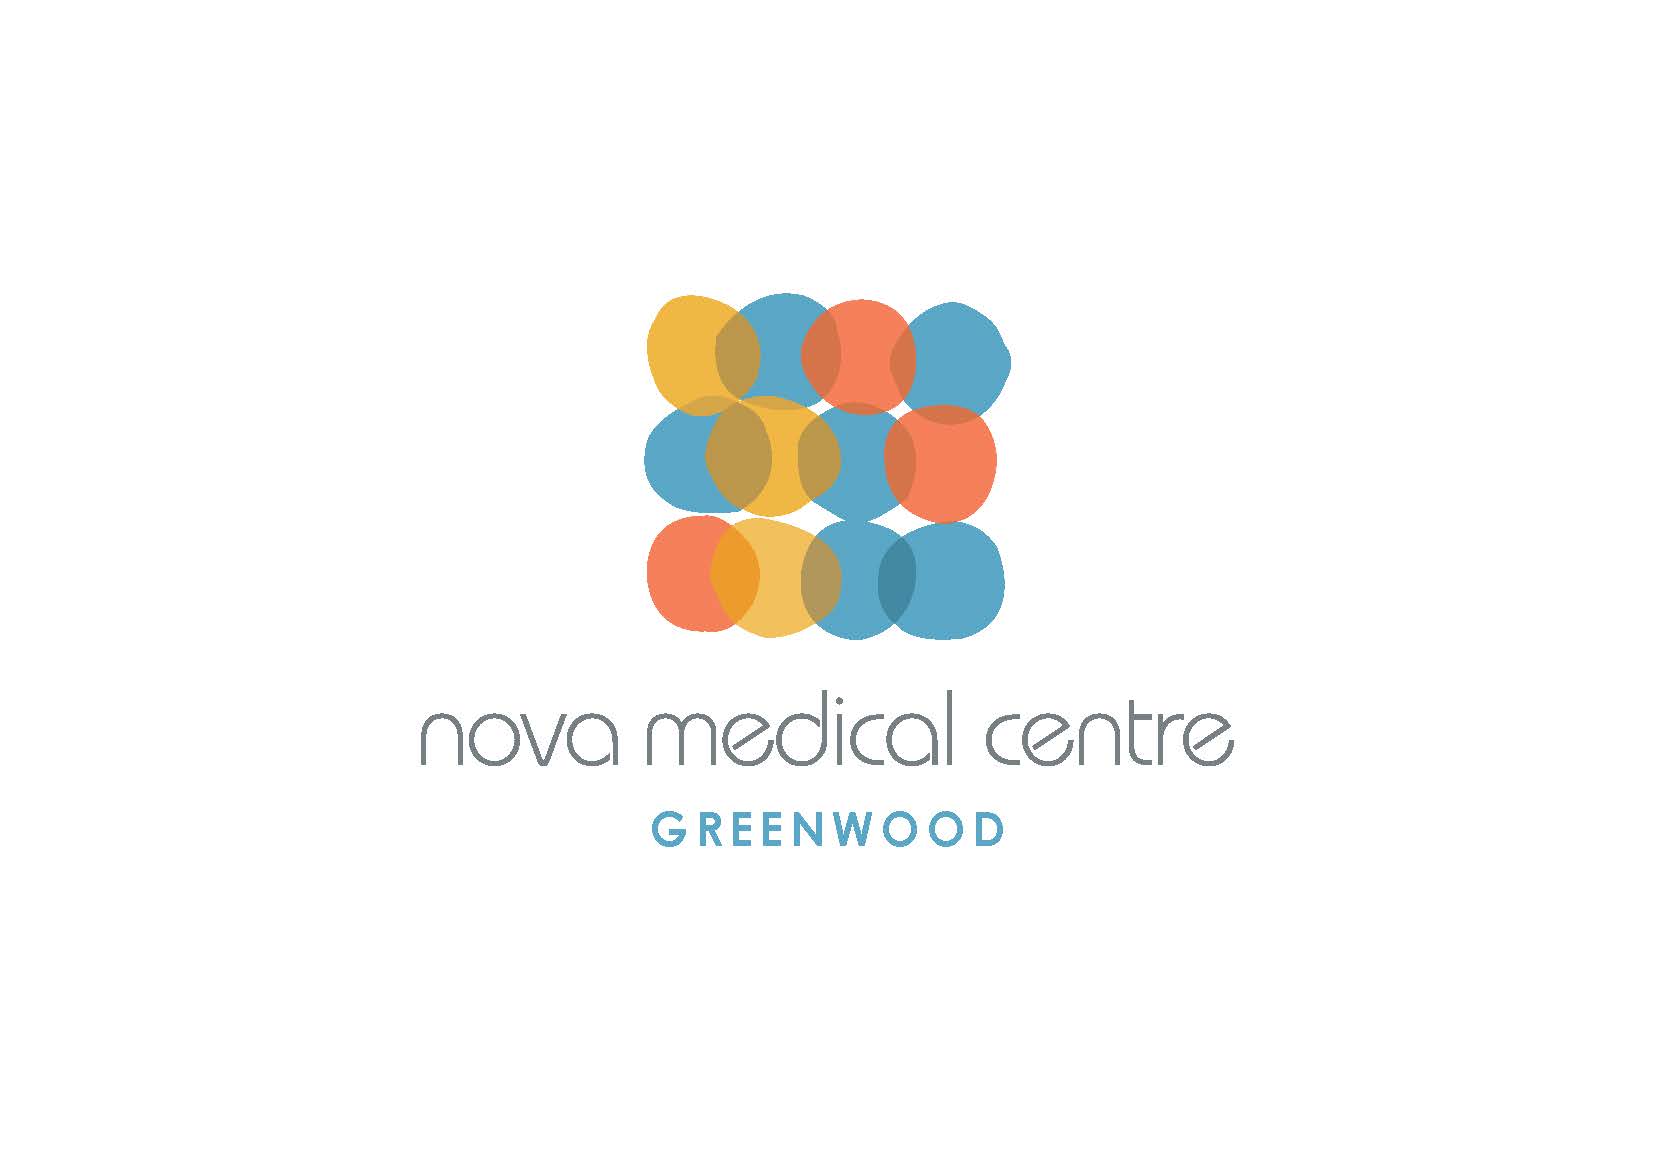 Nova Medical Centre Greenwood